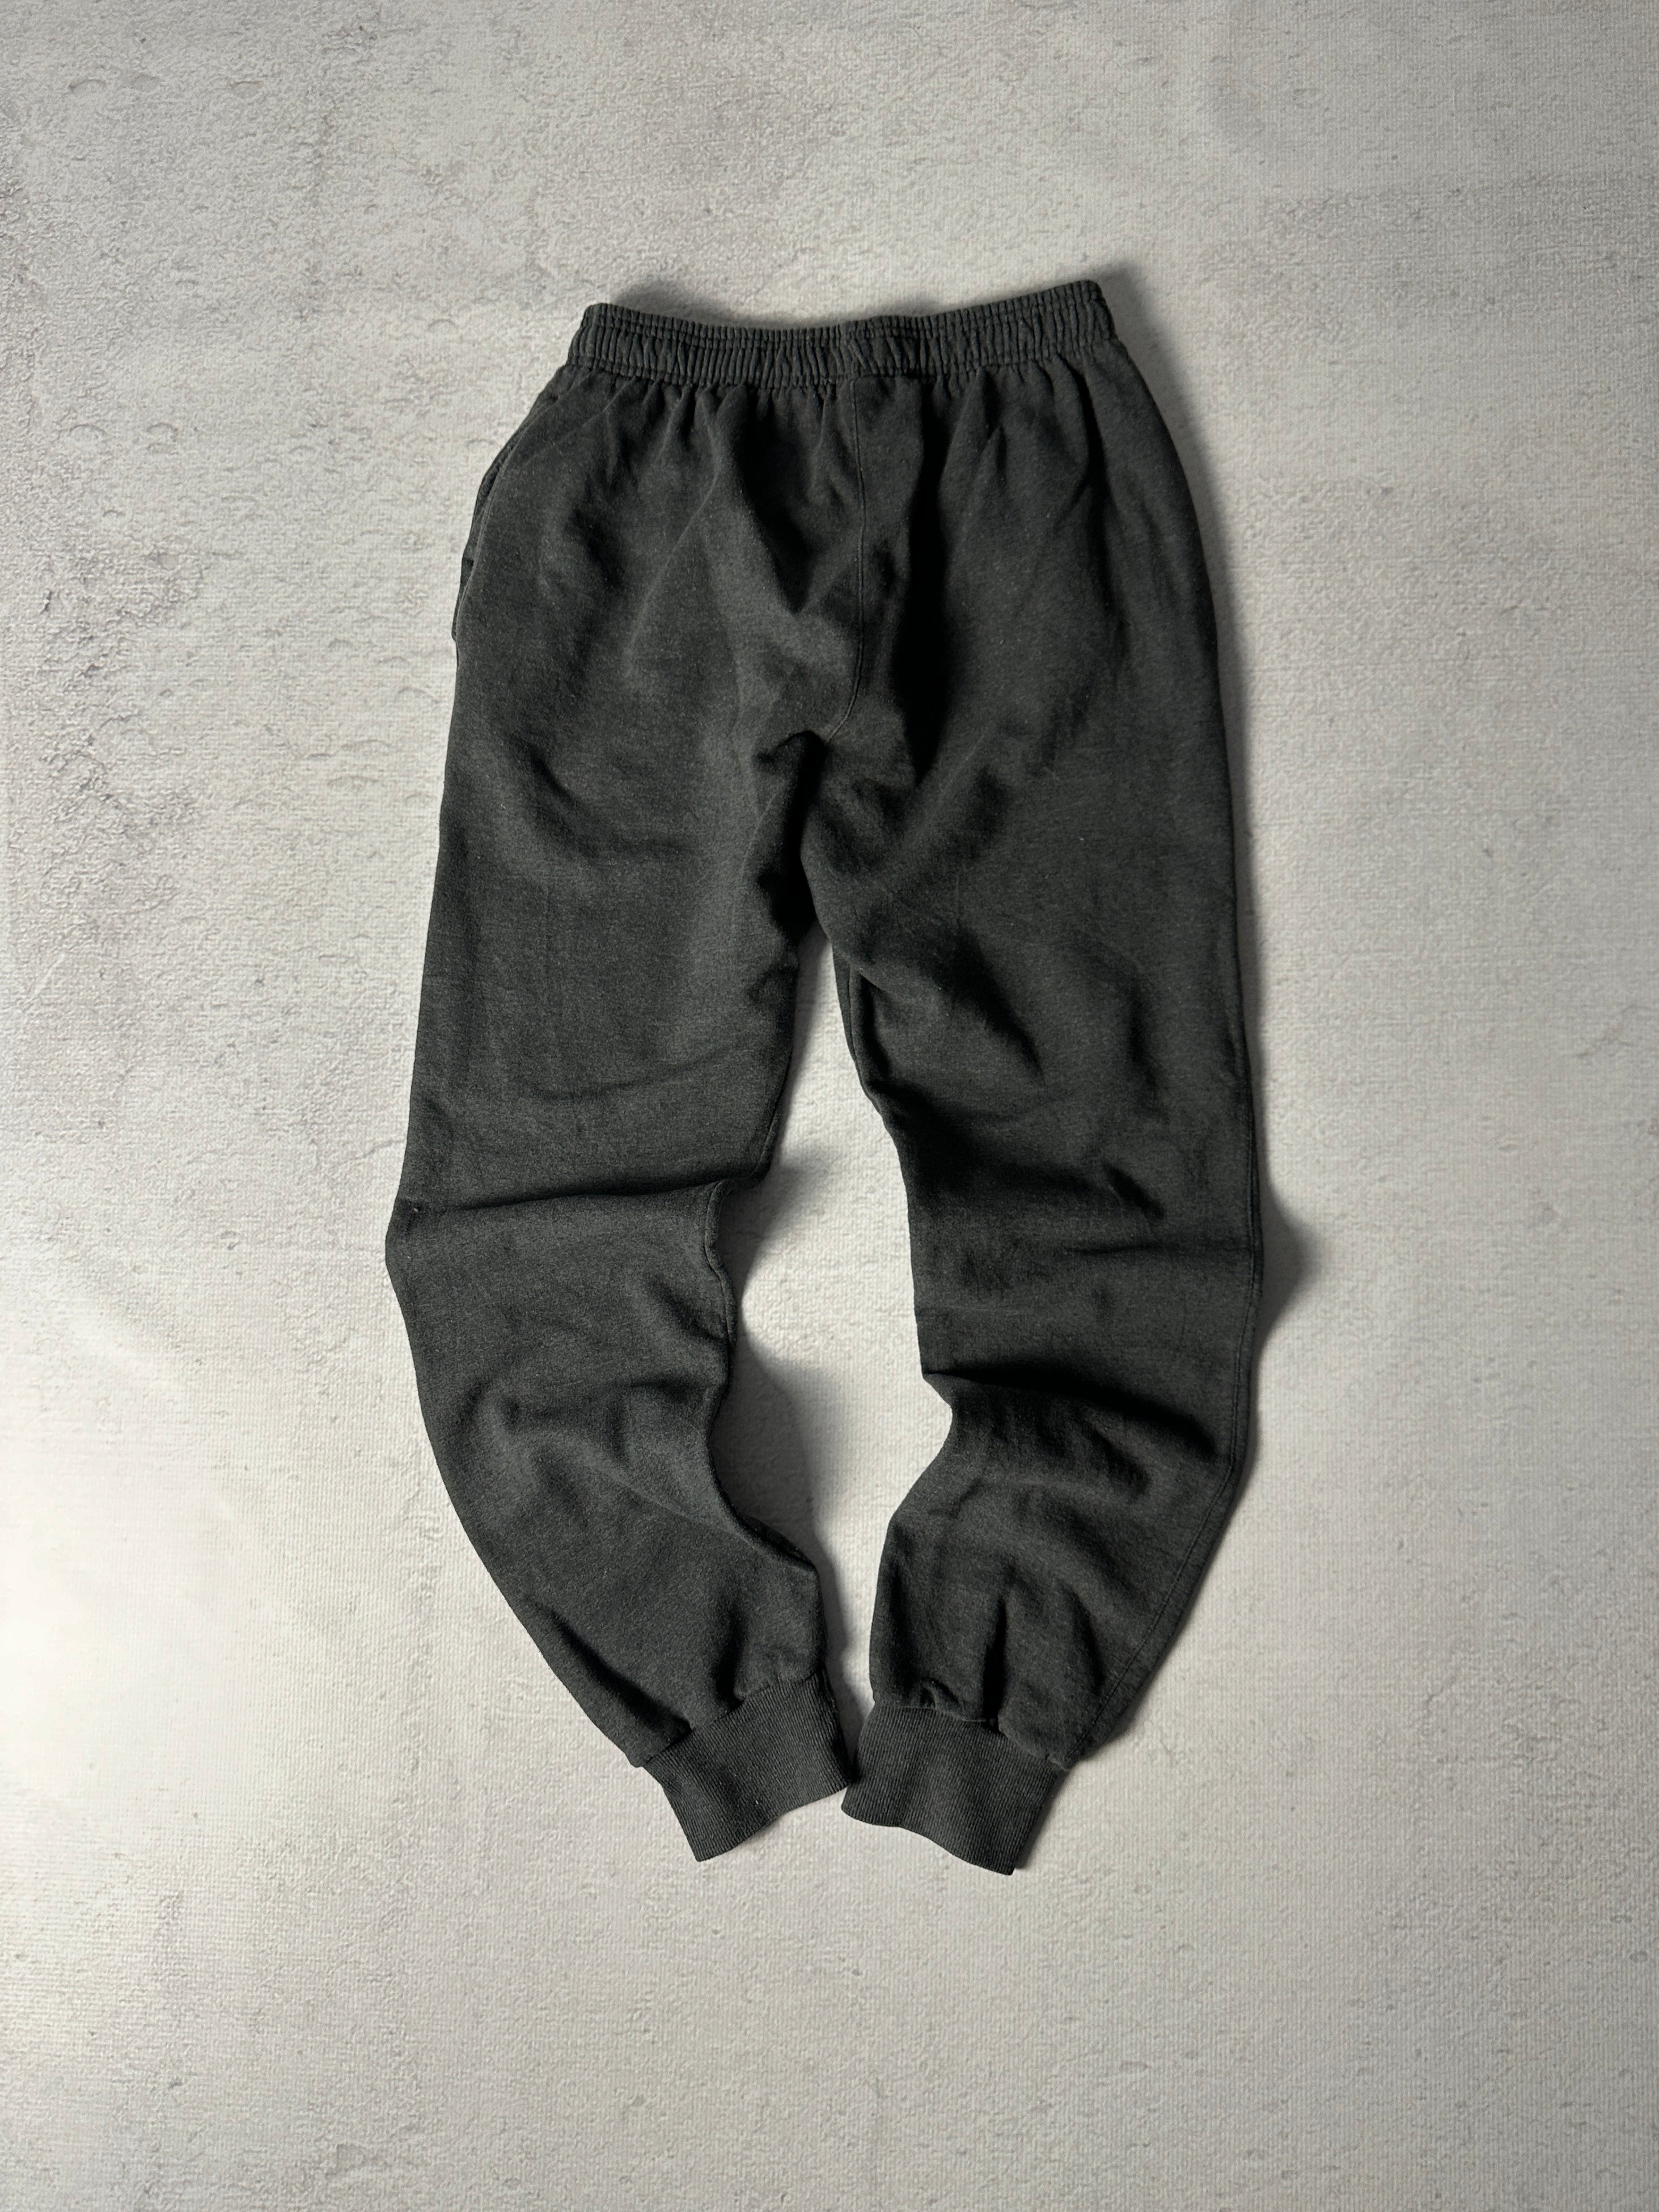 Vintage Champion Cuffed Sweatpants - Men's Medium